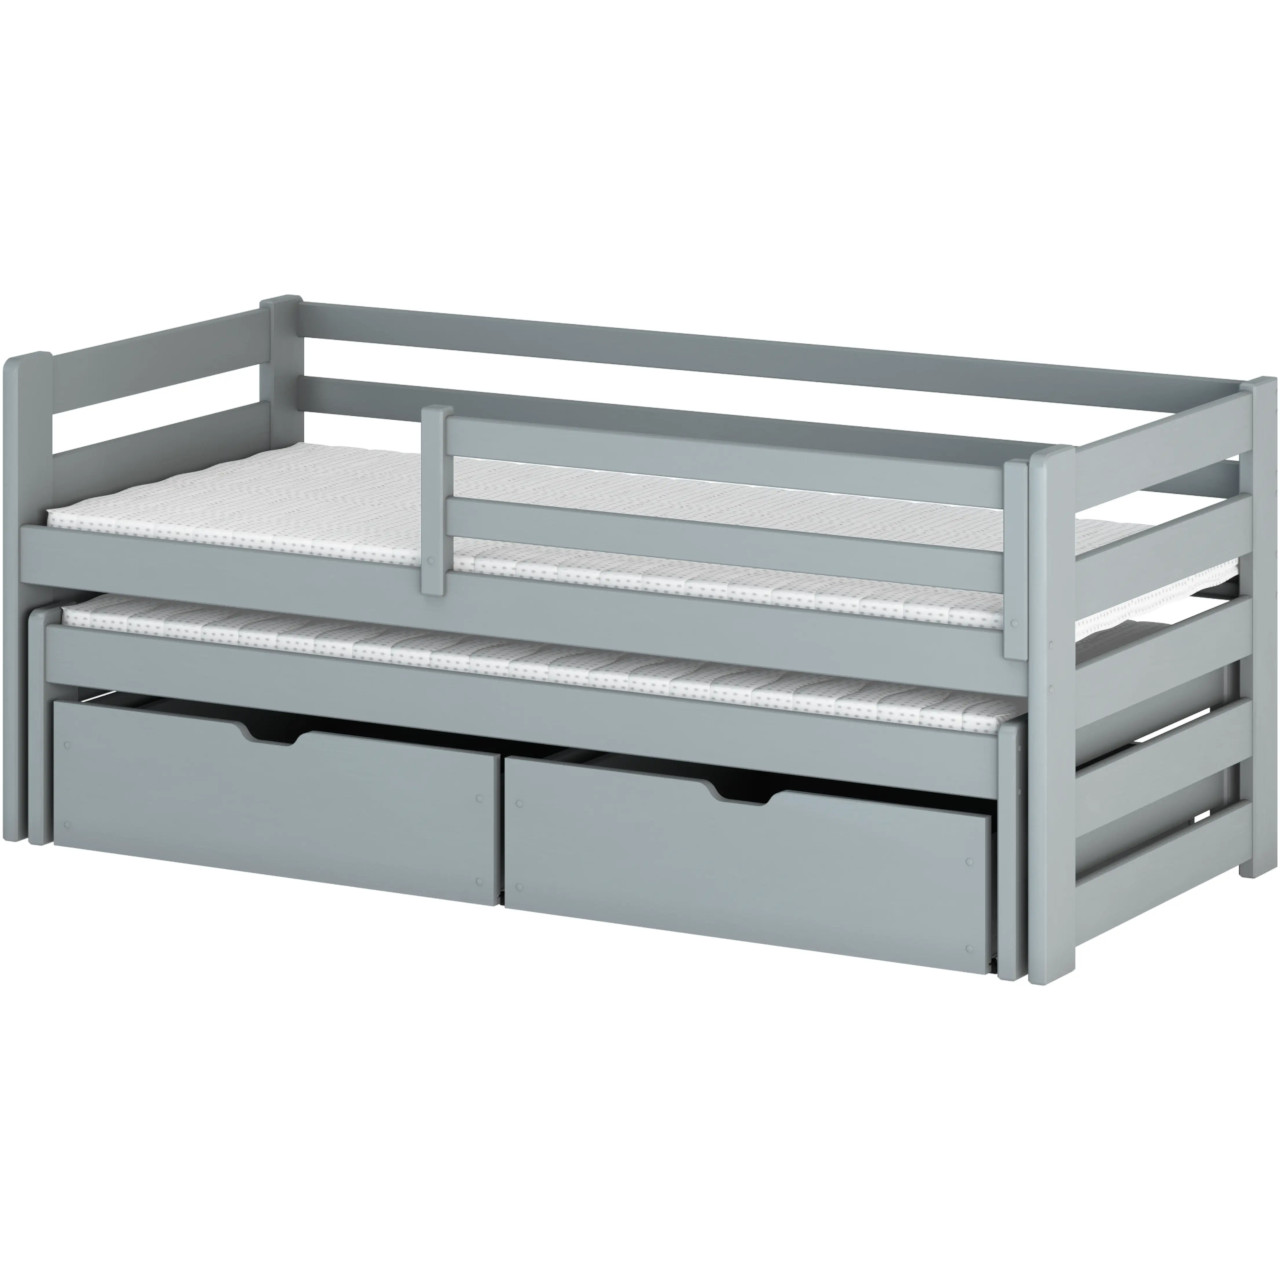 Bunk bed 90x200 LISA ash grey